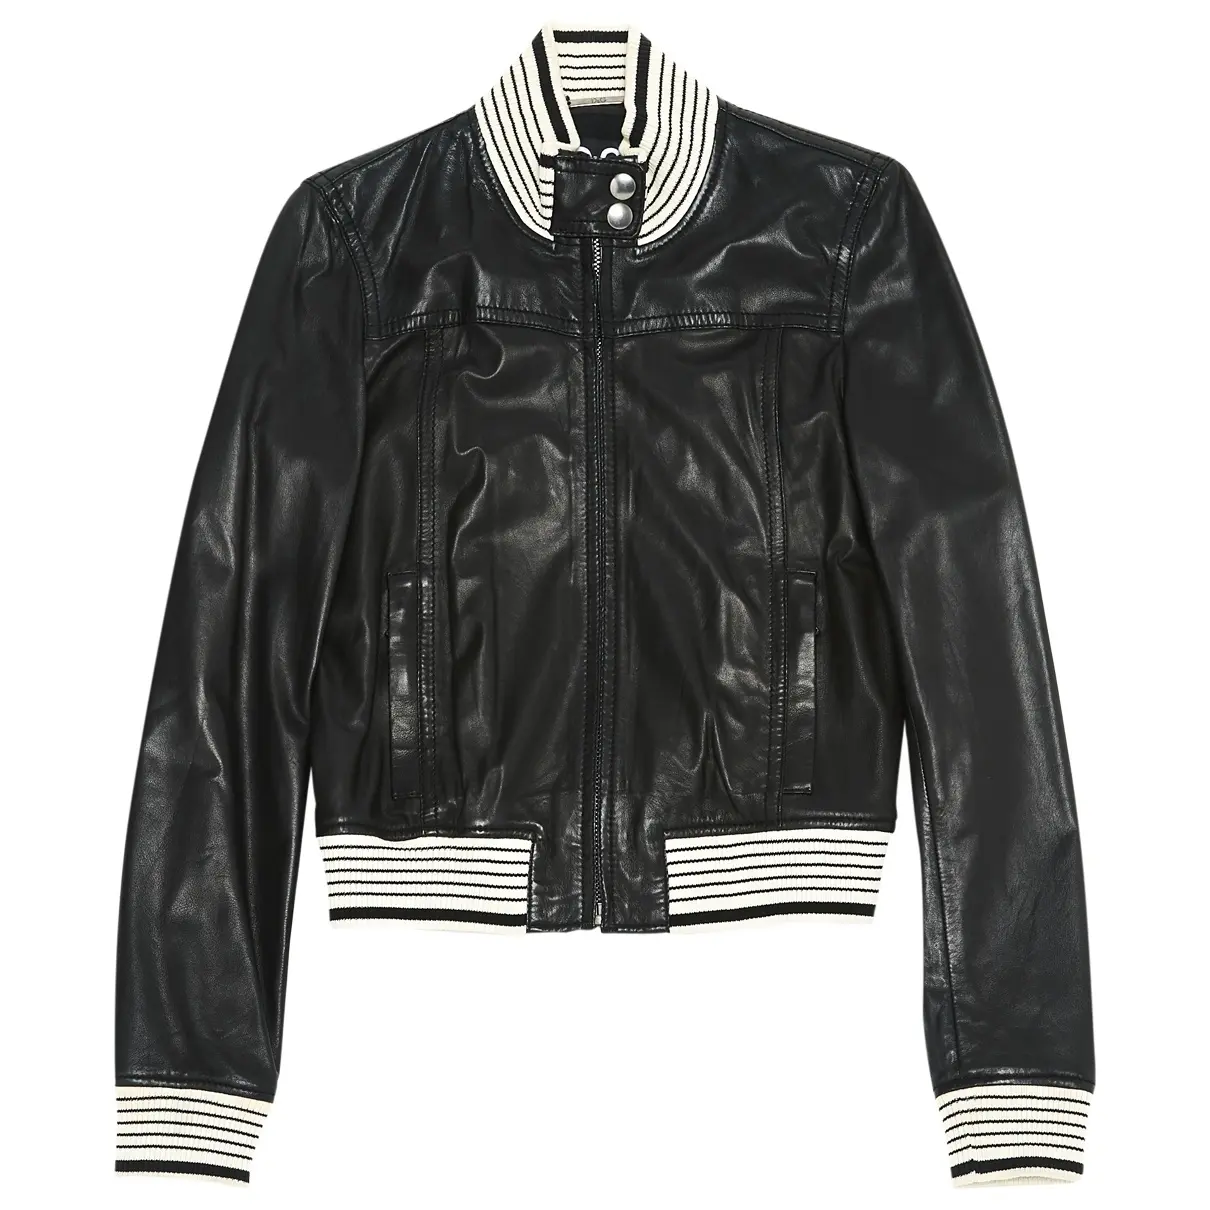 Leather jacket D&G